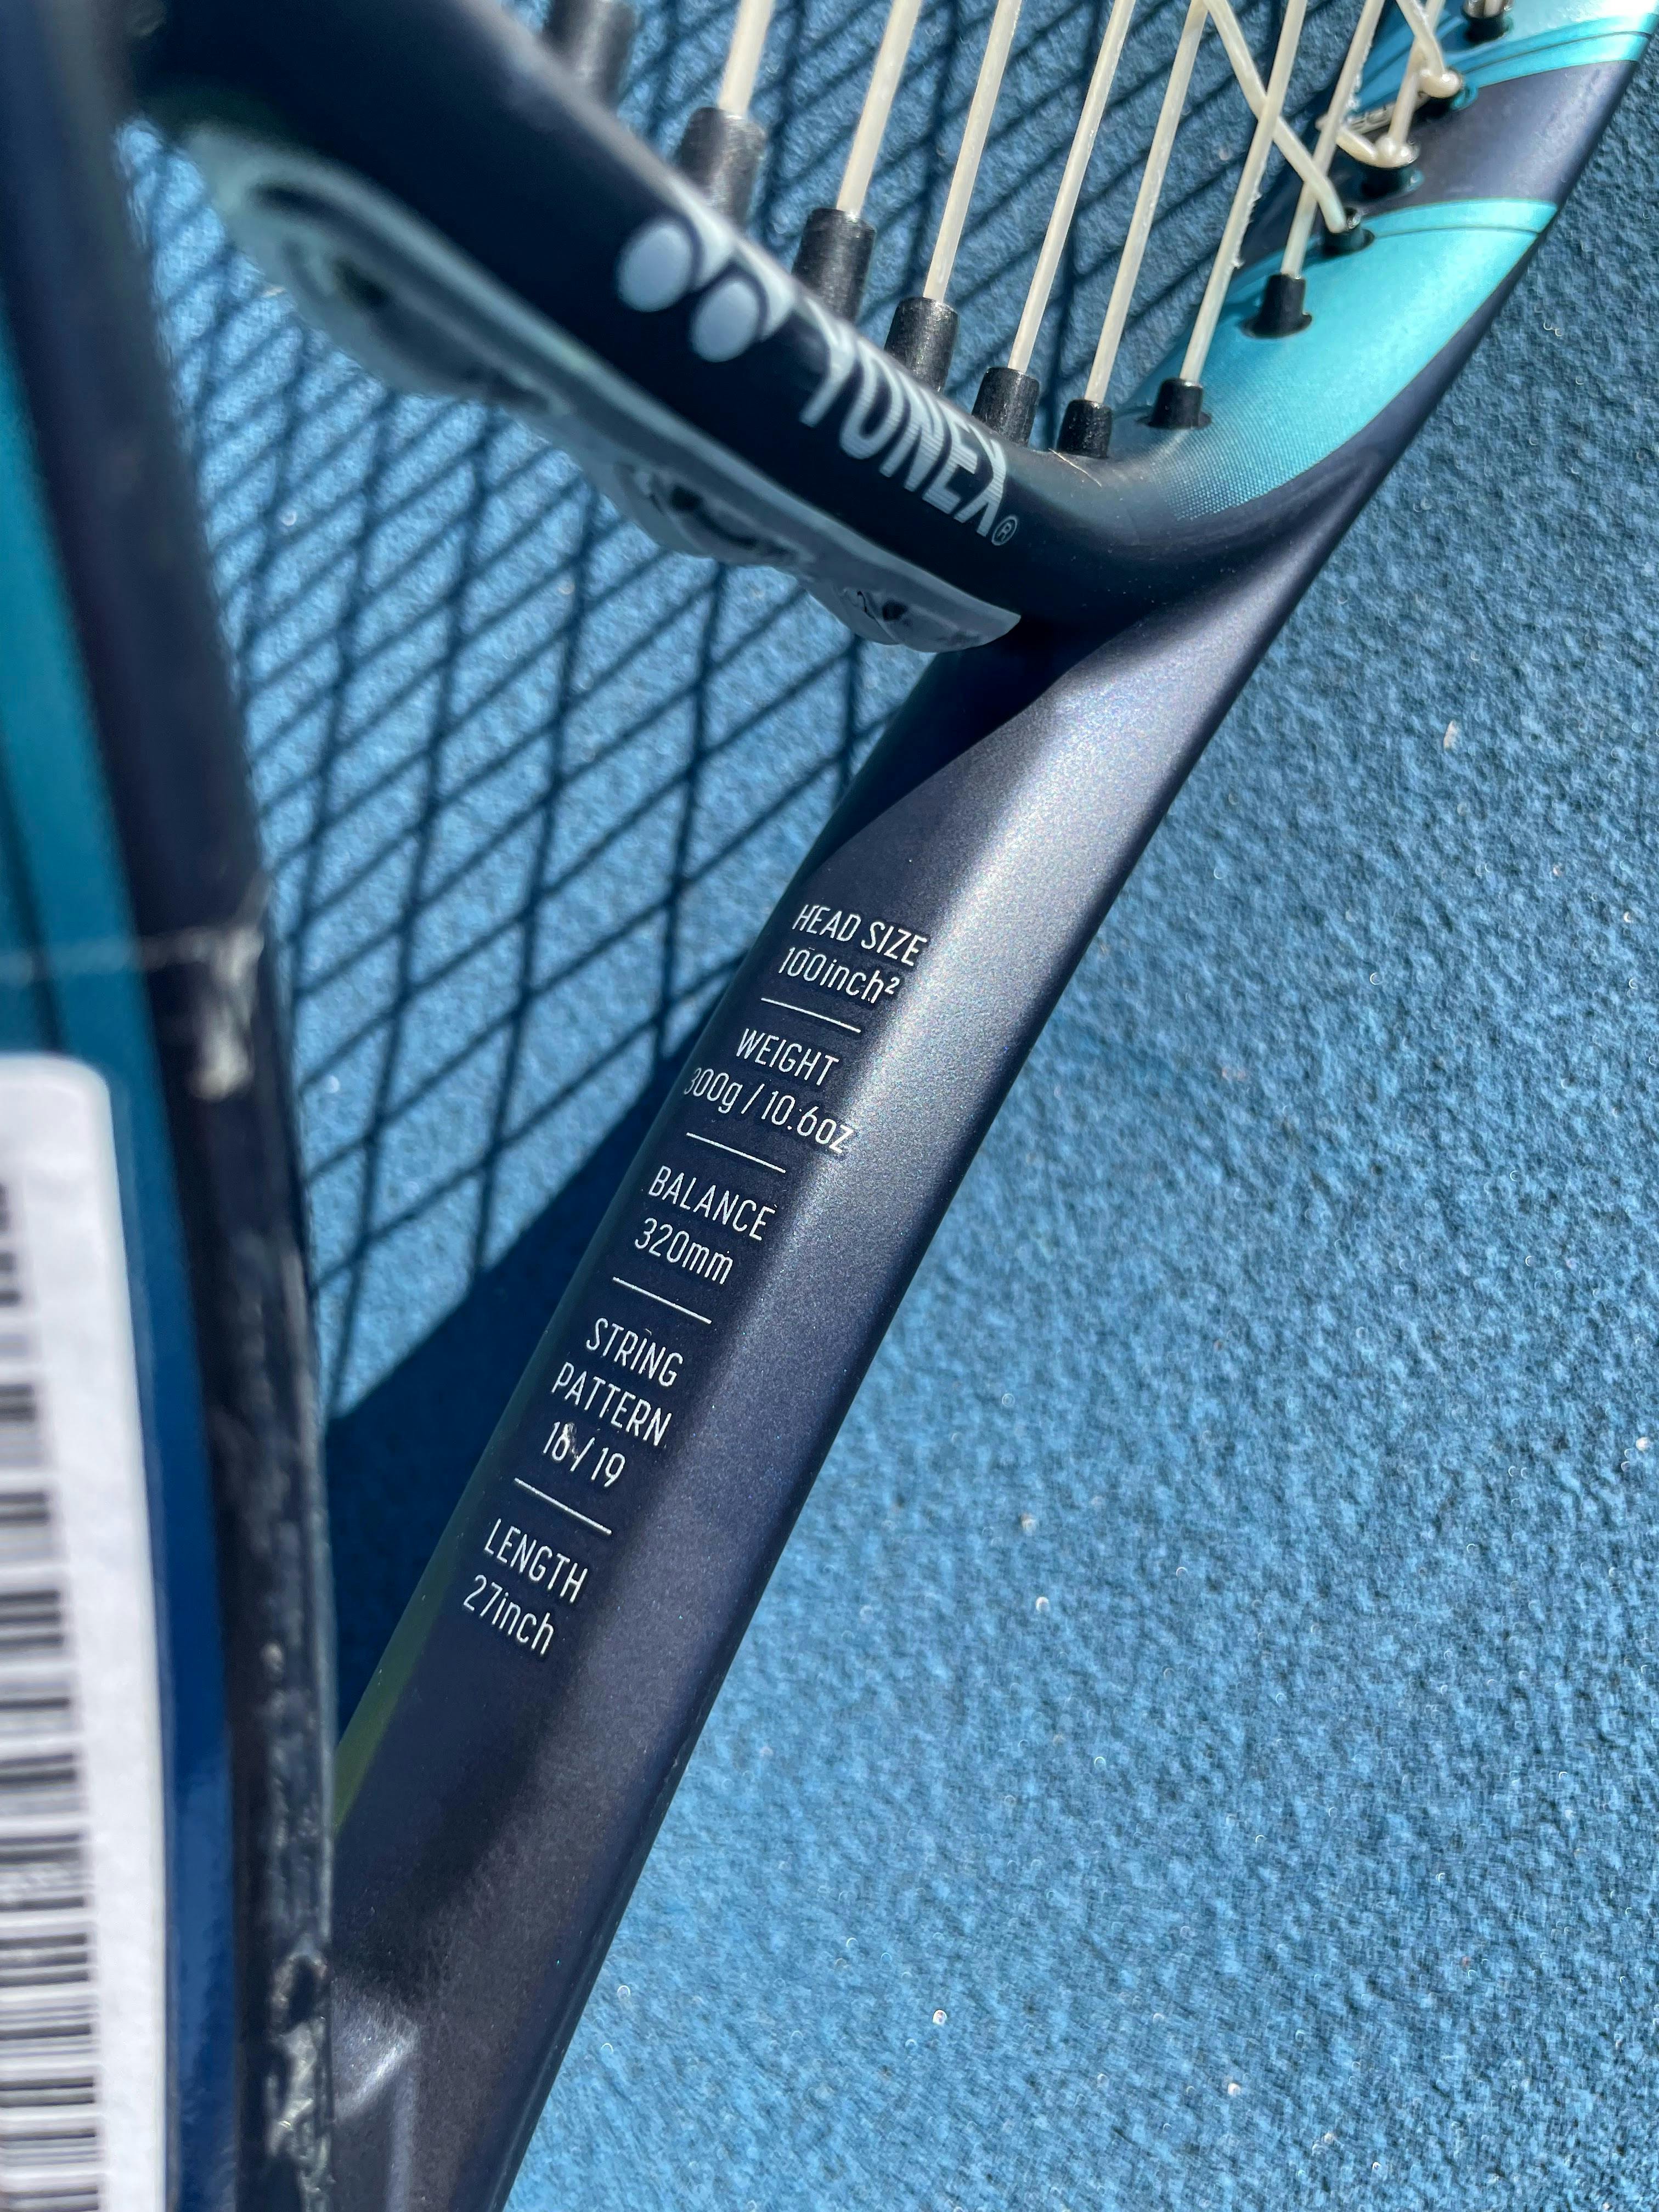 The inside of the Yonex EZone 100 Racquet.